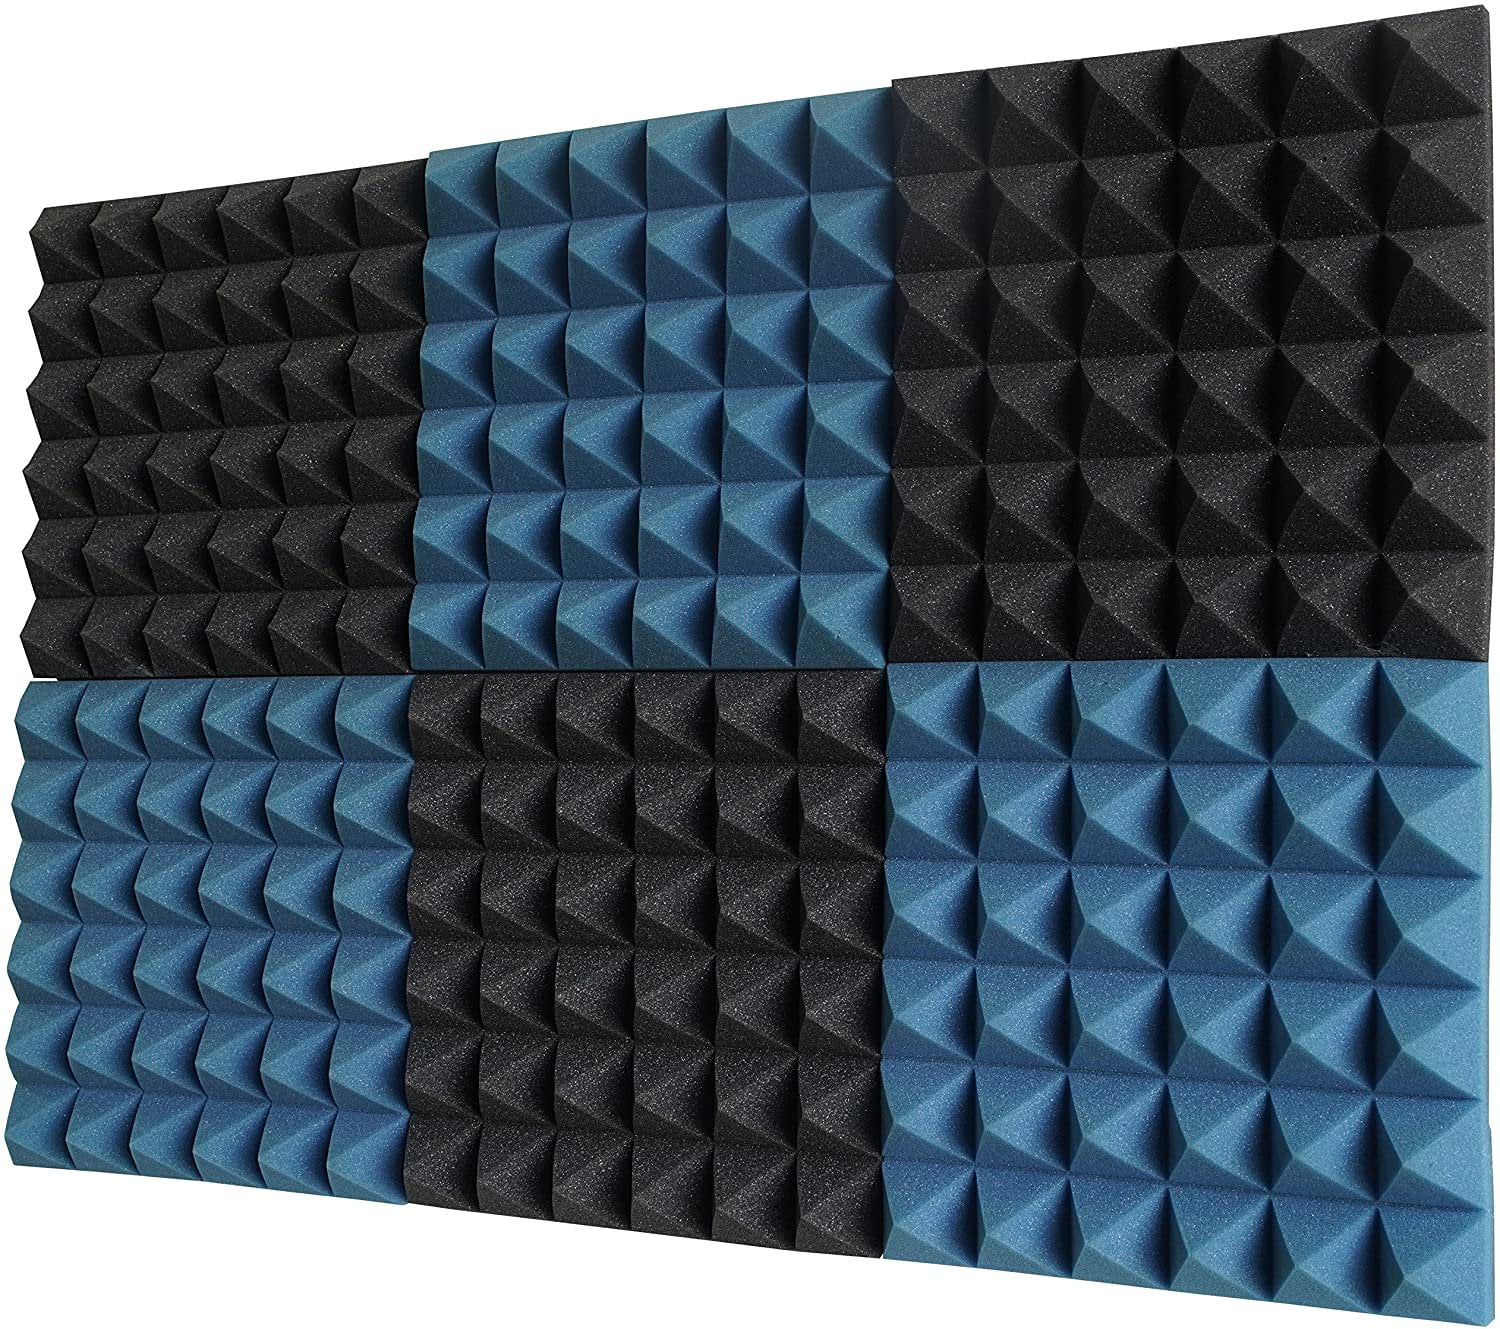 All Ice Blue Acoustic Panels Studio Foam Wedges 2 X 12 X 12 Foamily 6 Pack 